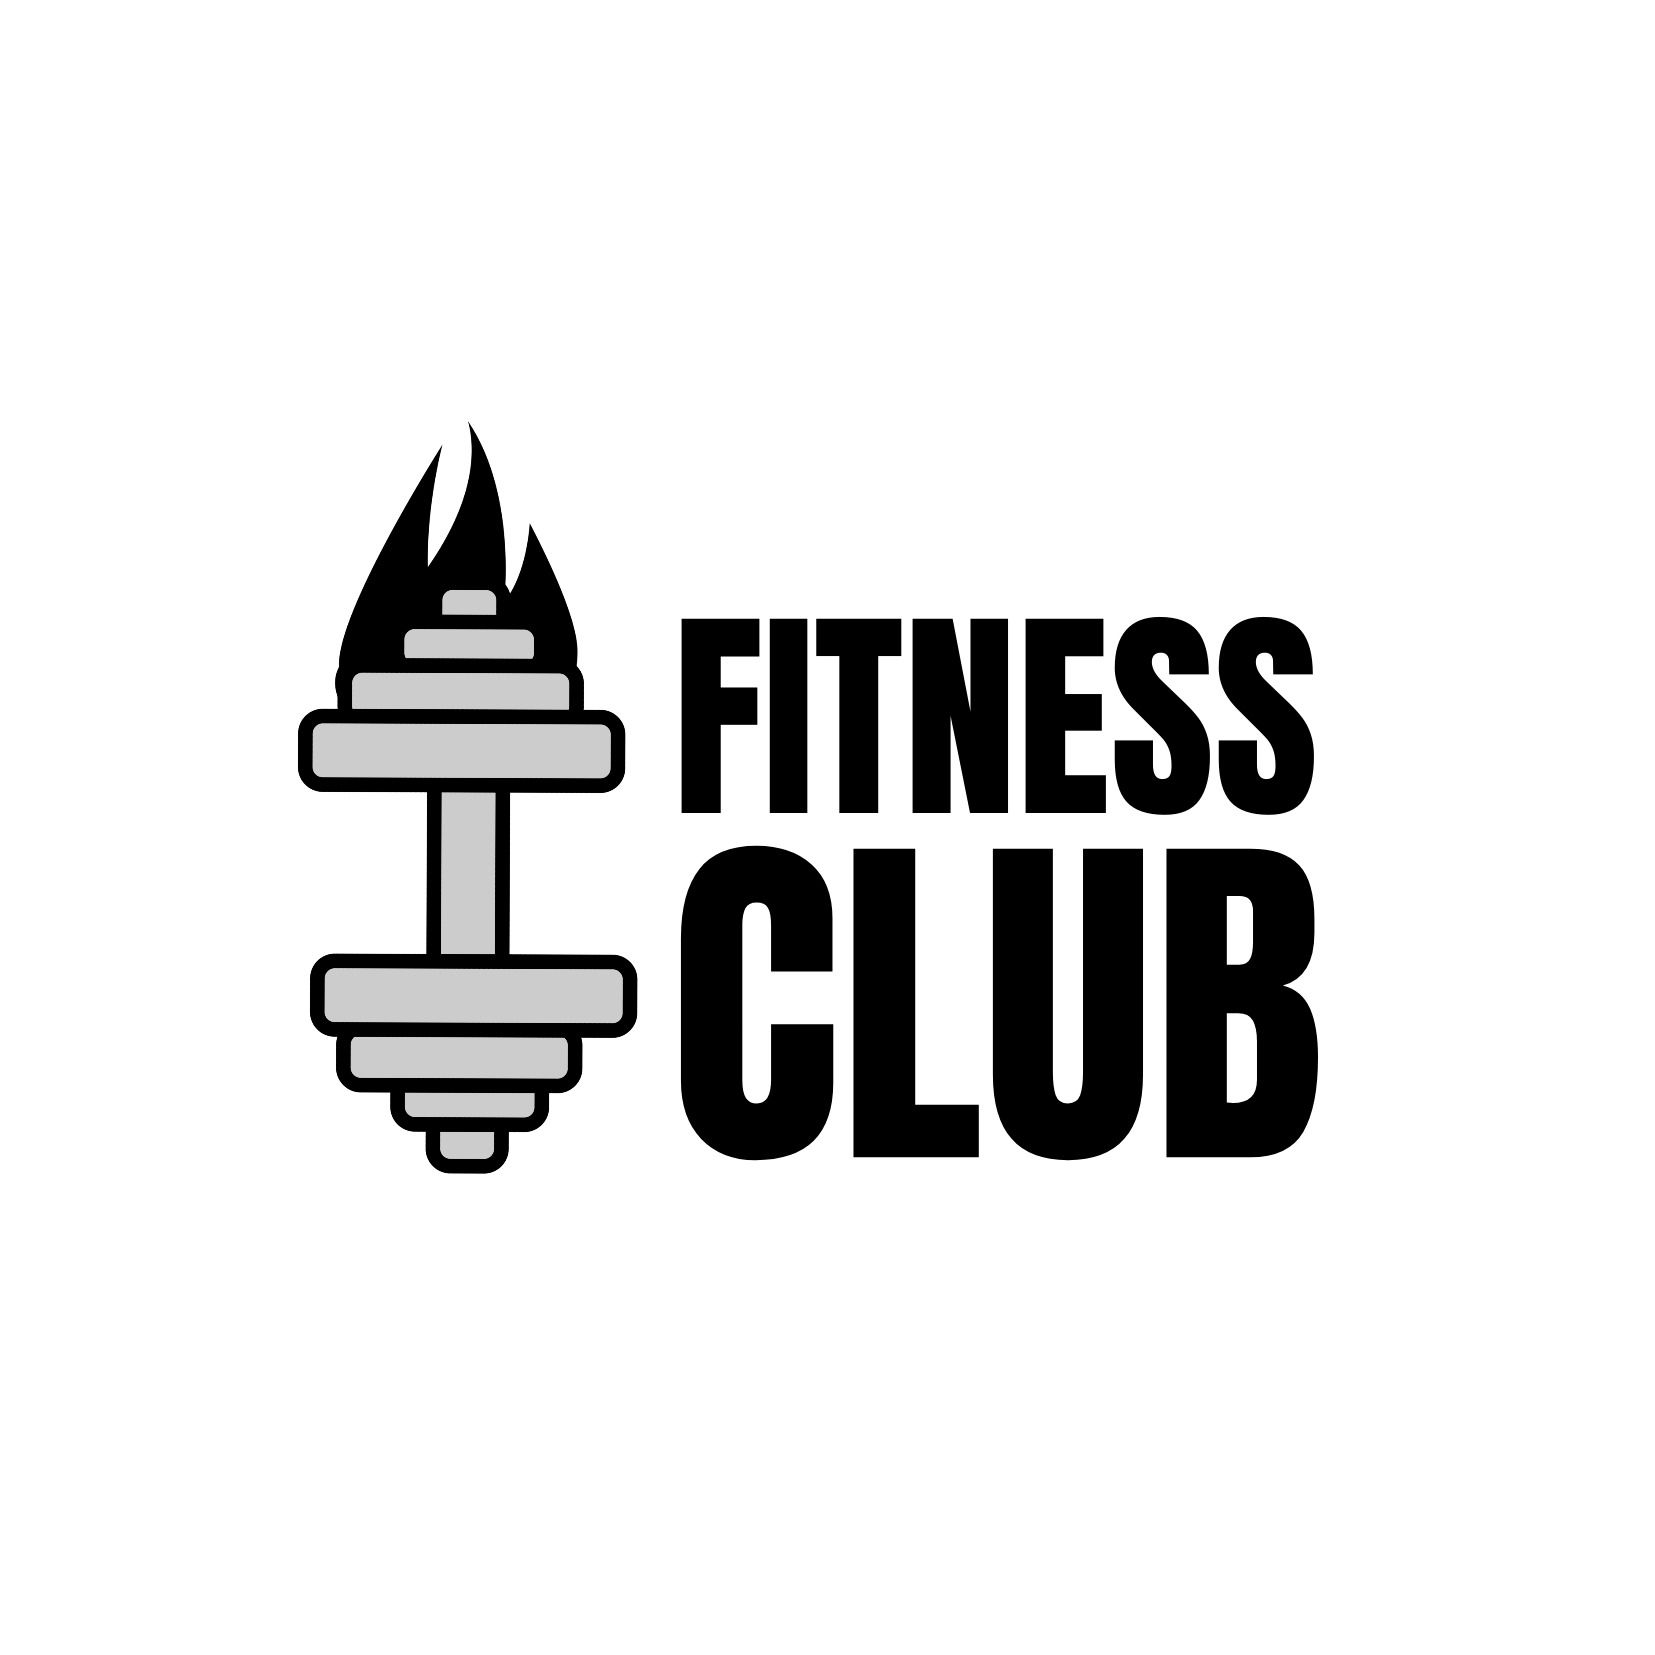 Kreative Fitness-Logo-Designs